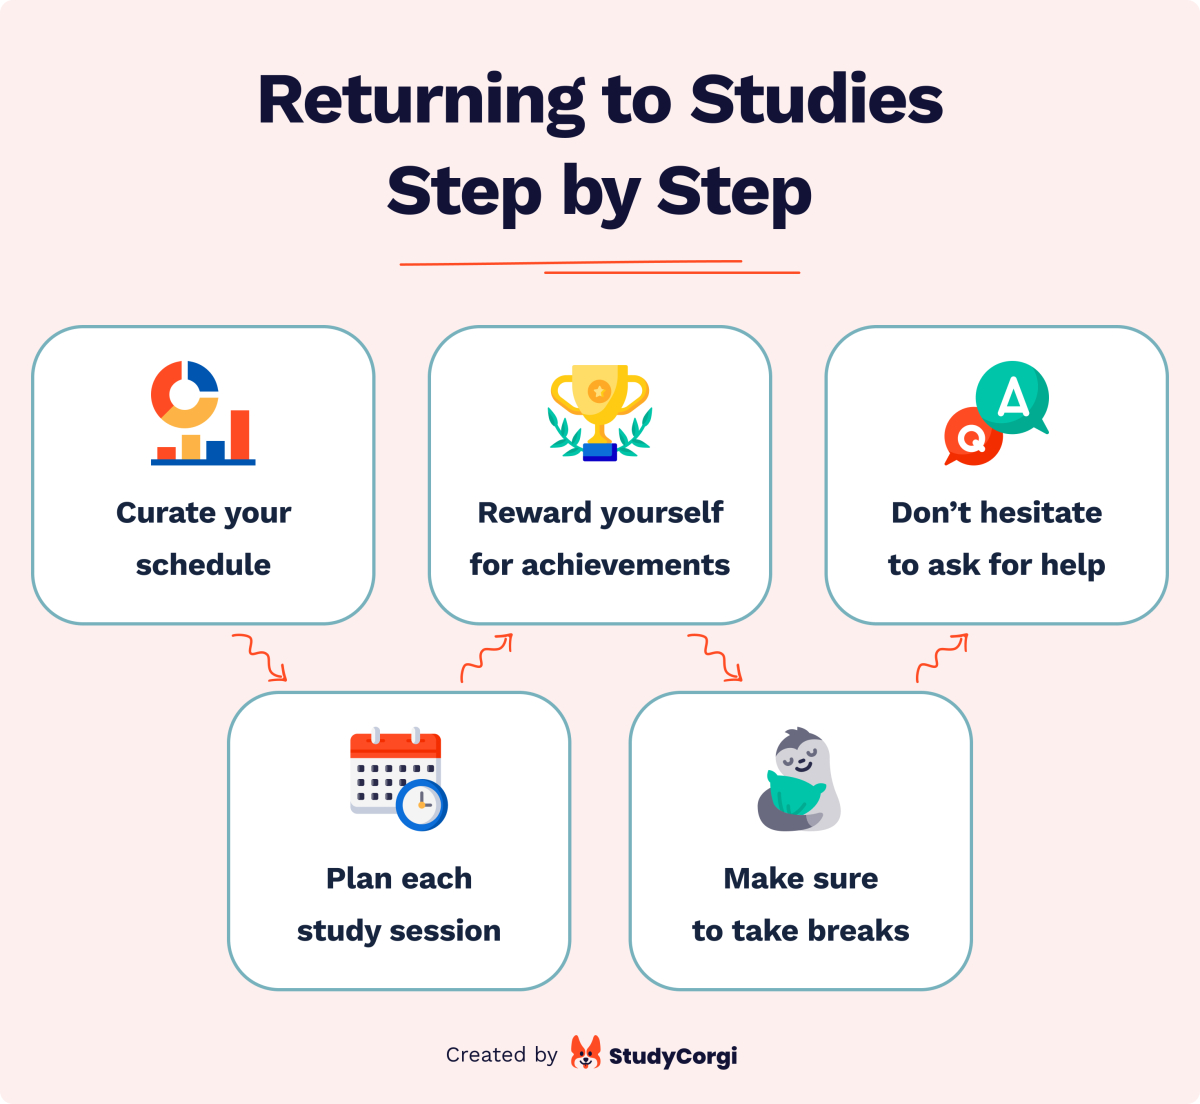 Returning to studies step by step.